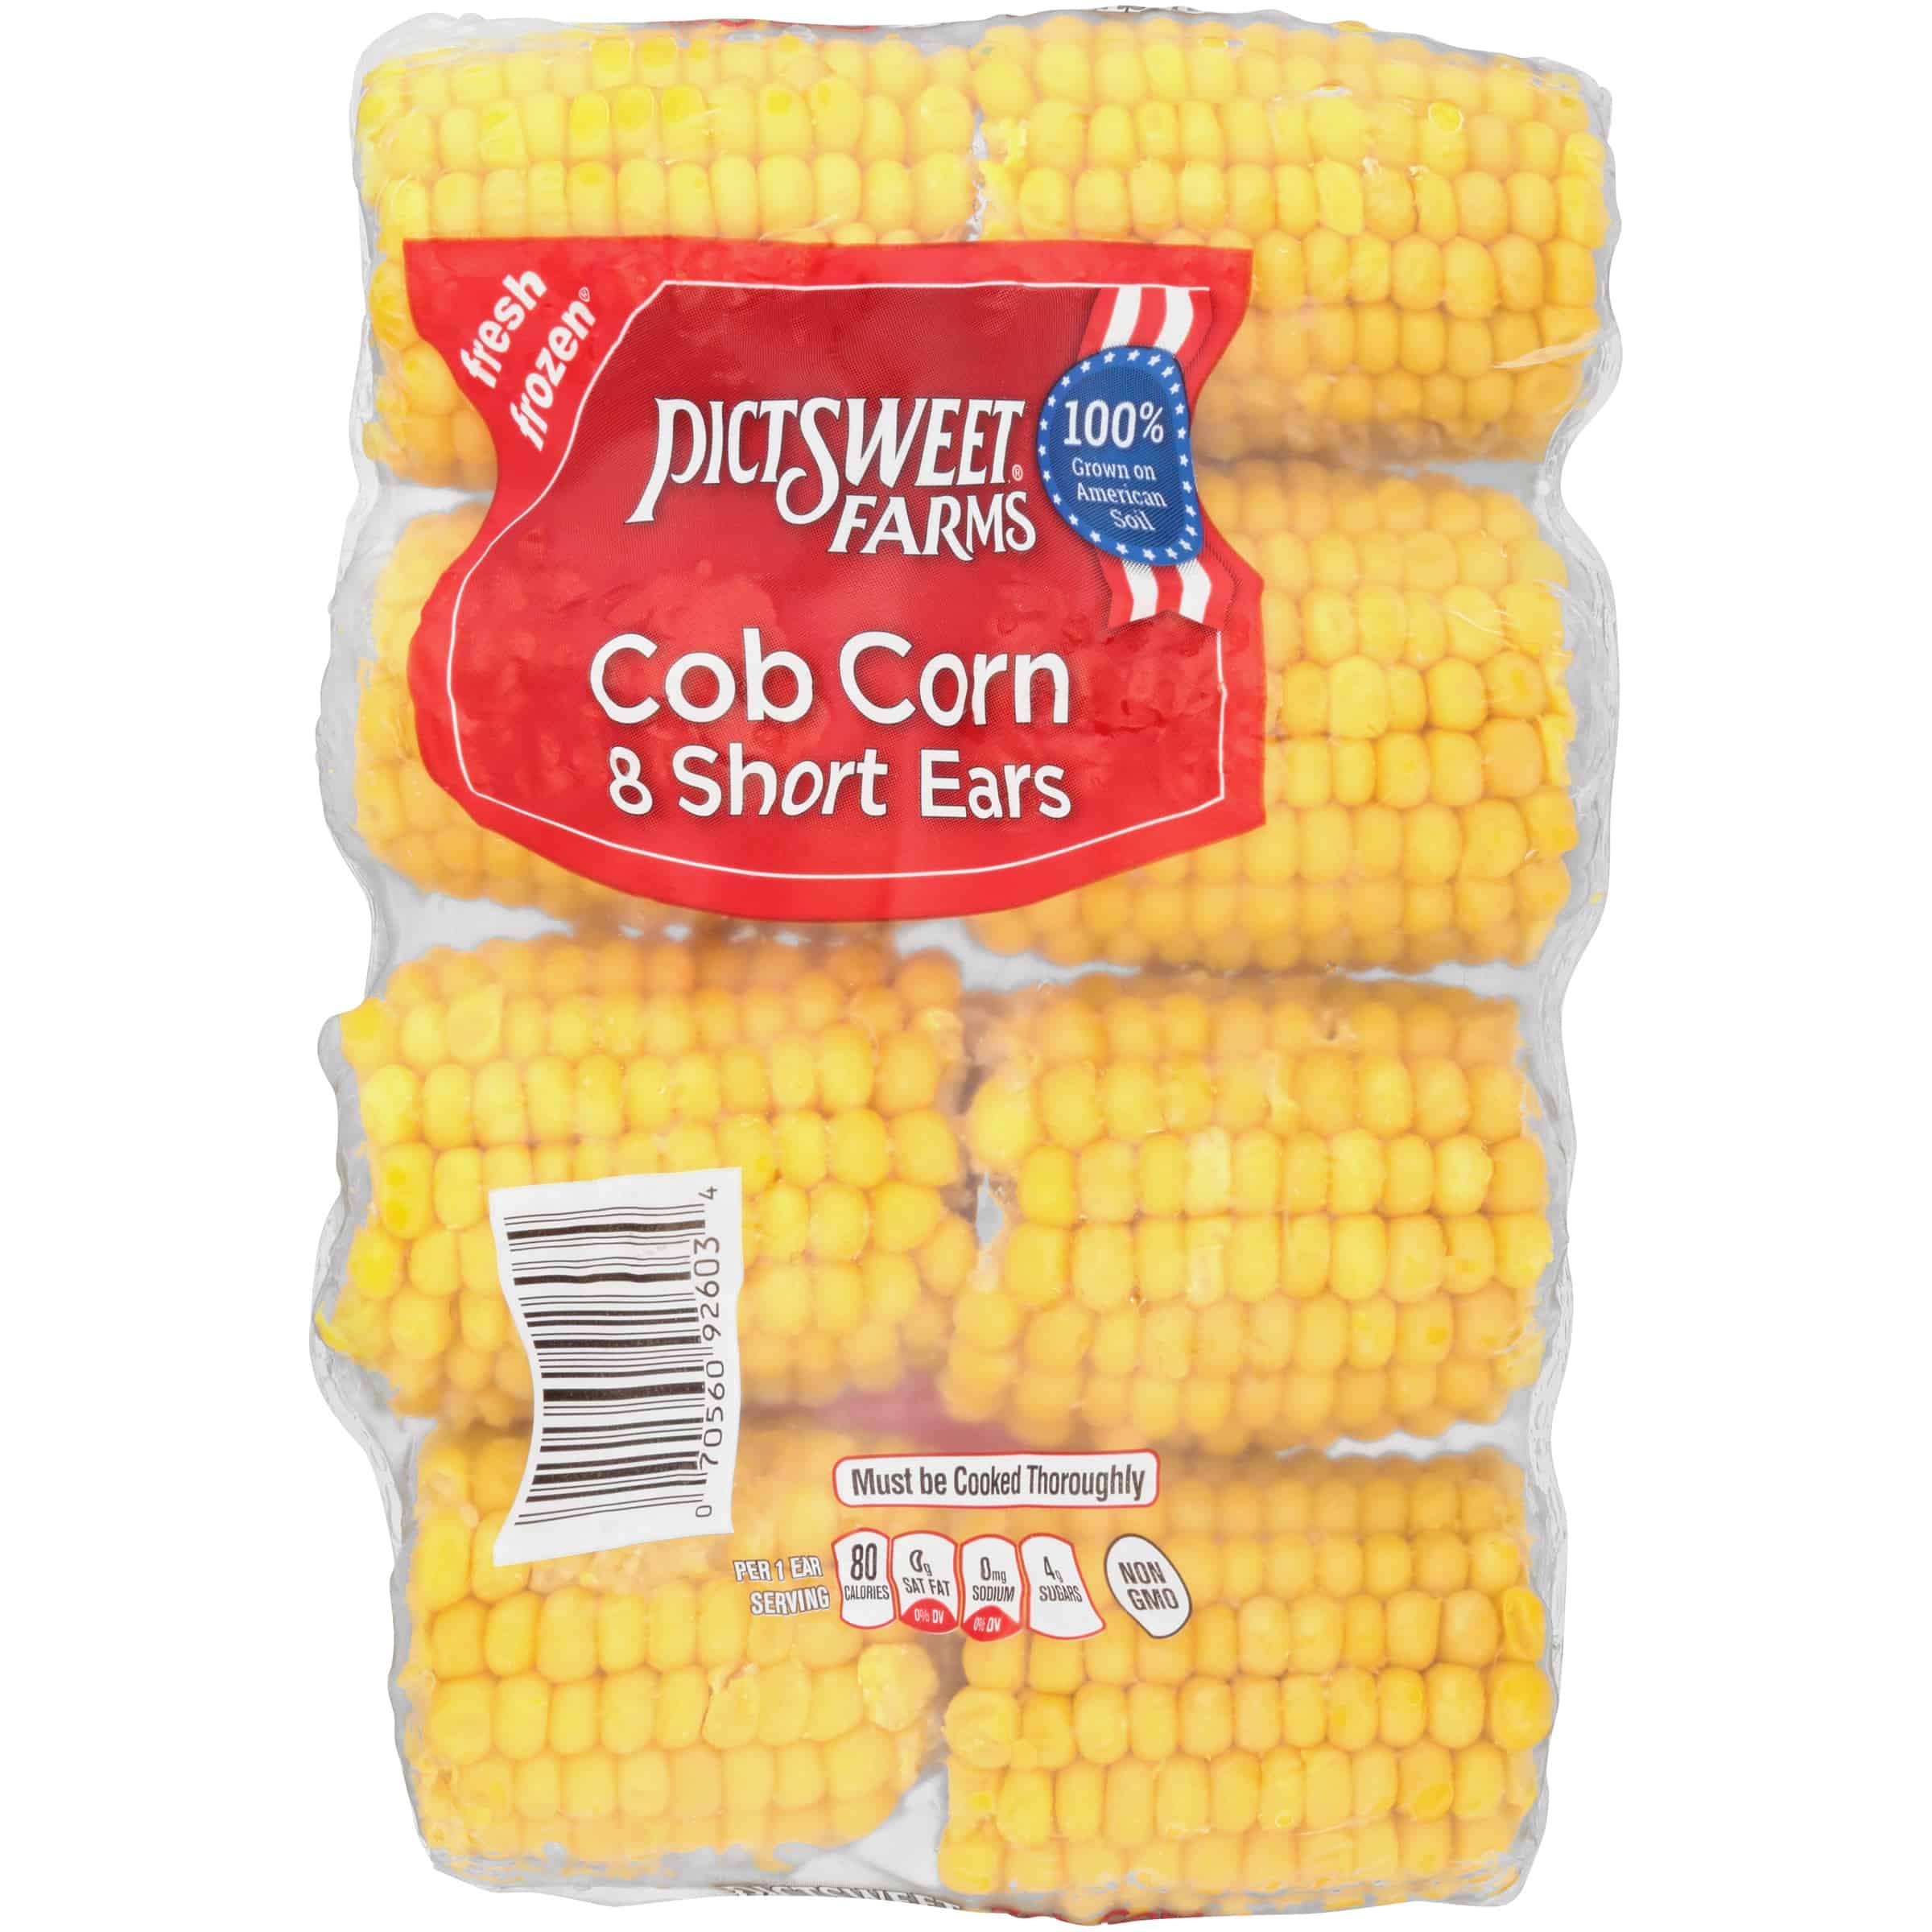 Pictsweet corn on cob 8 ct